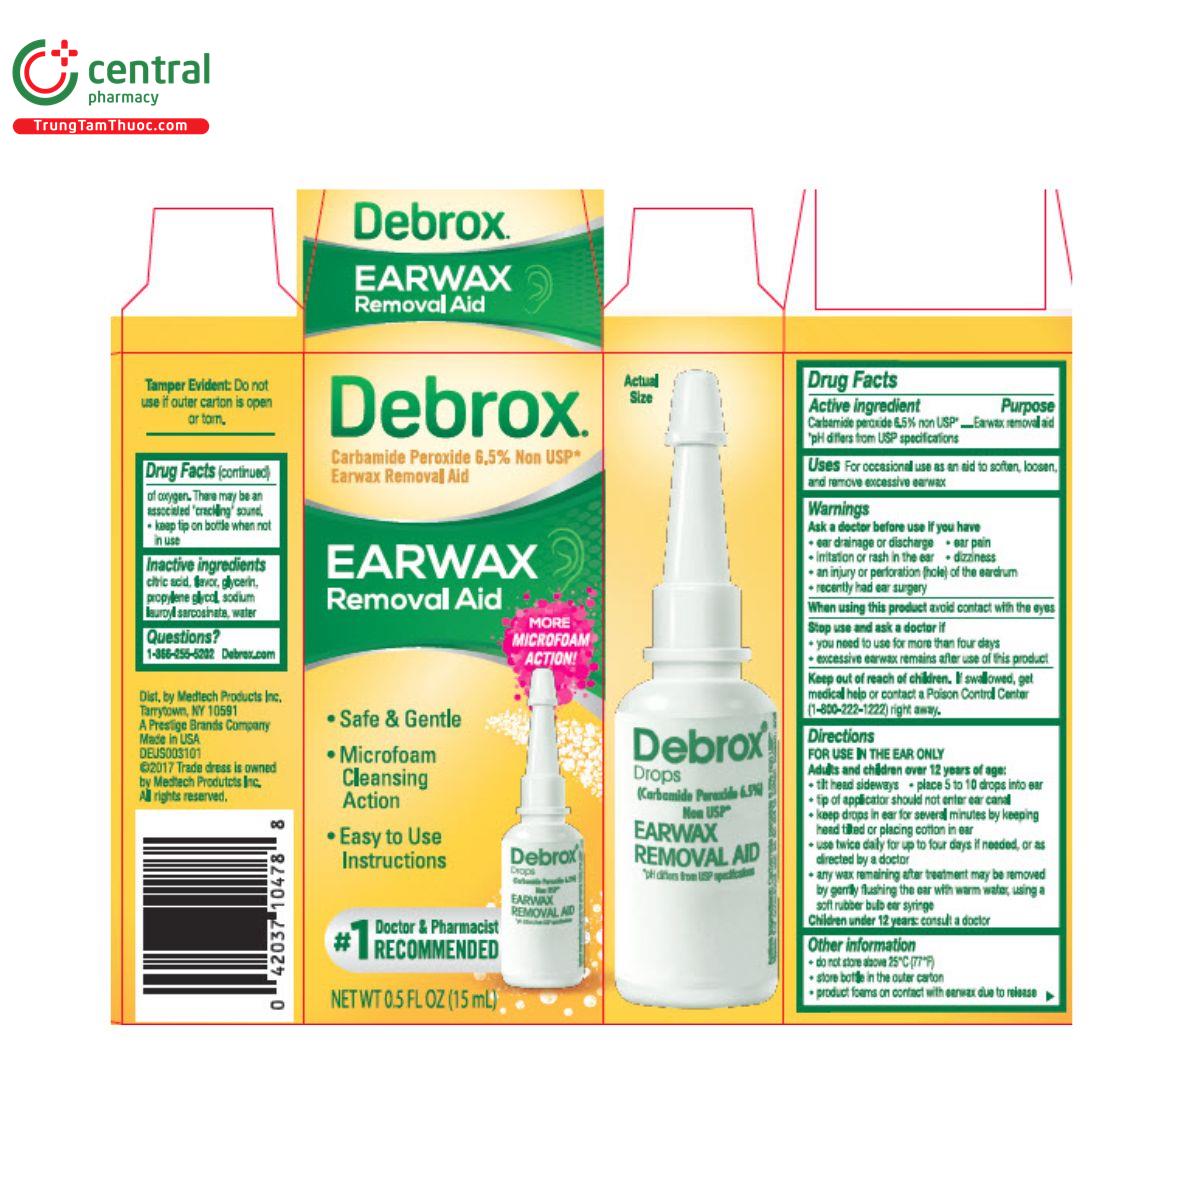 debrox earwax removal aid 5 N5443